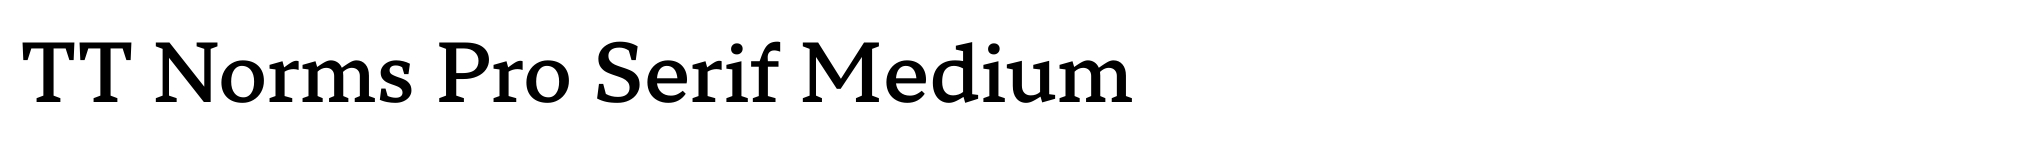 TT Norms Pro Serif Medium image